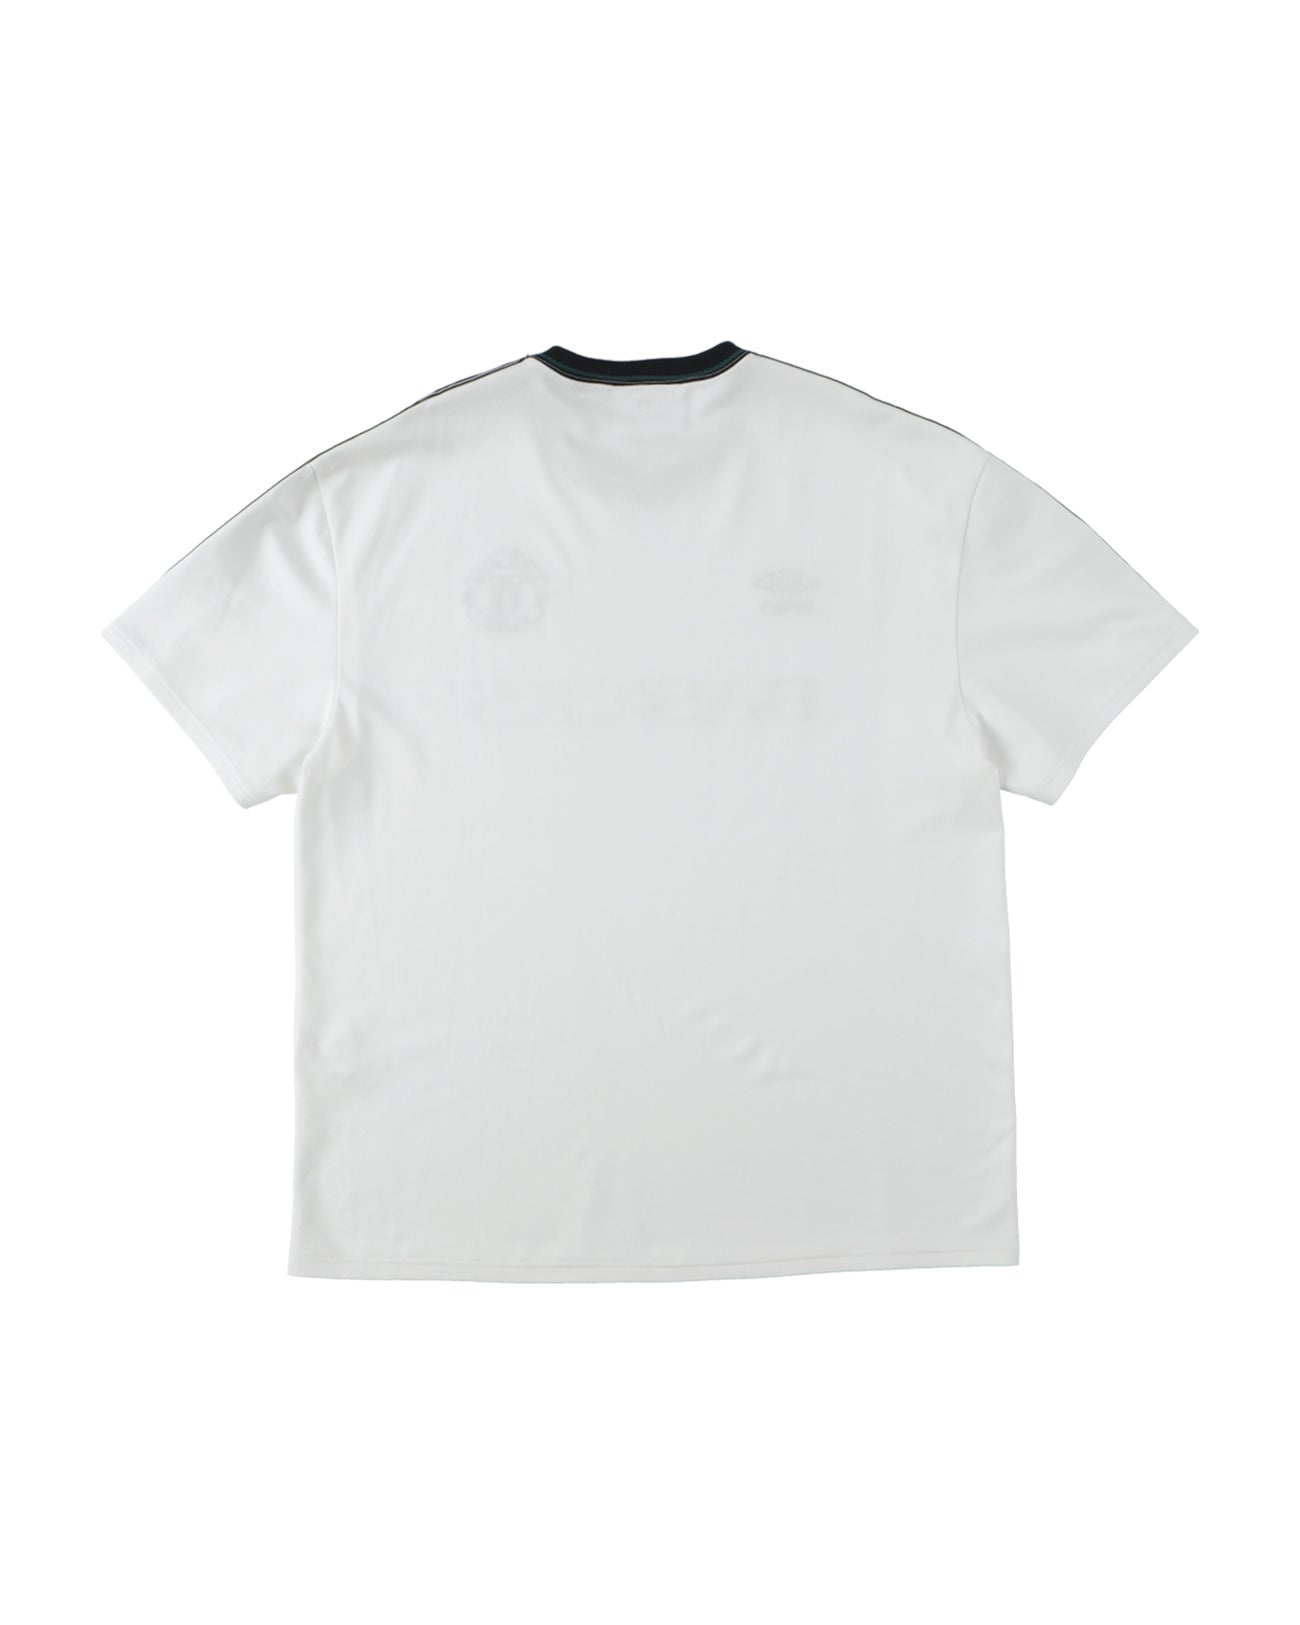 x UMBRO Uniform T-shirt - white - FAB4 ONLINE STORE